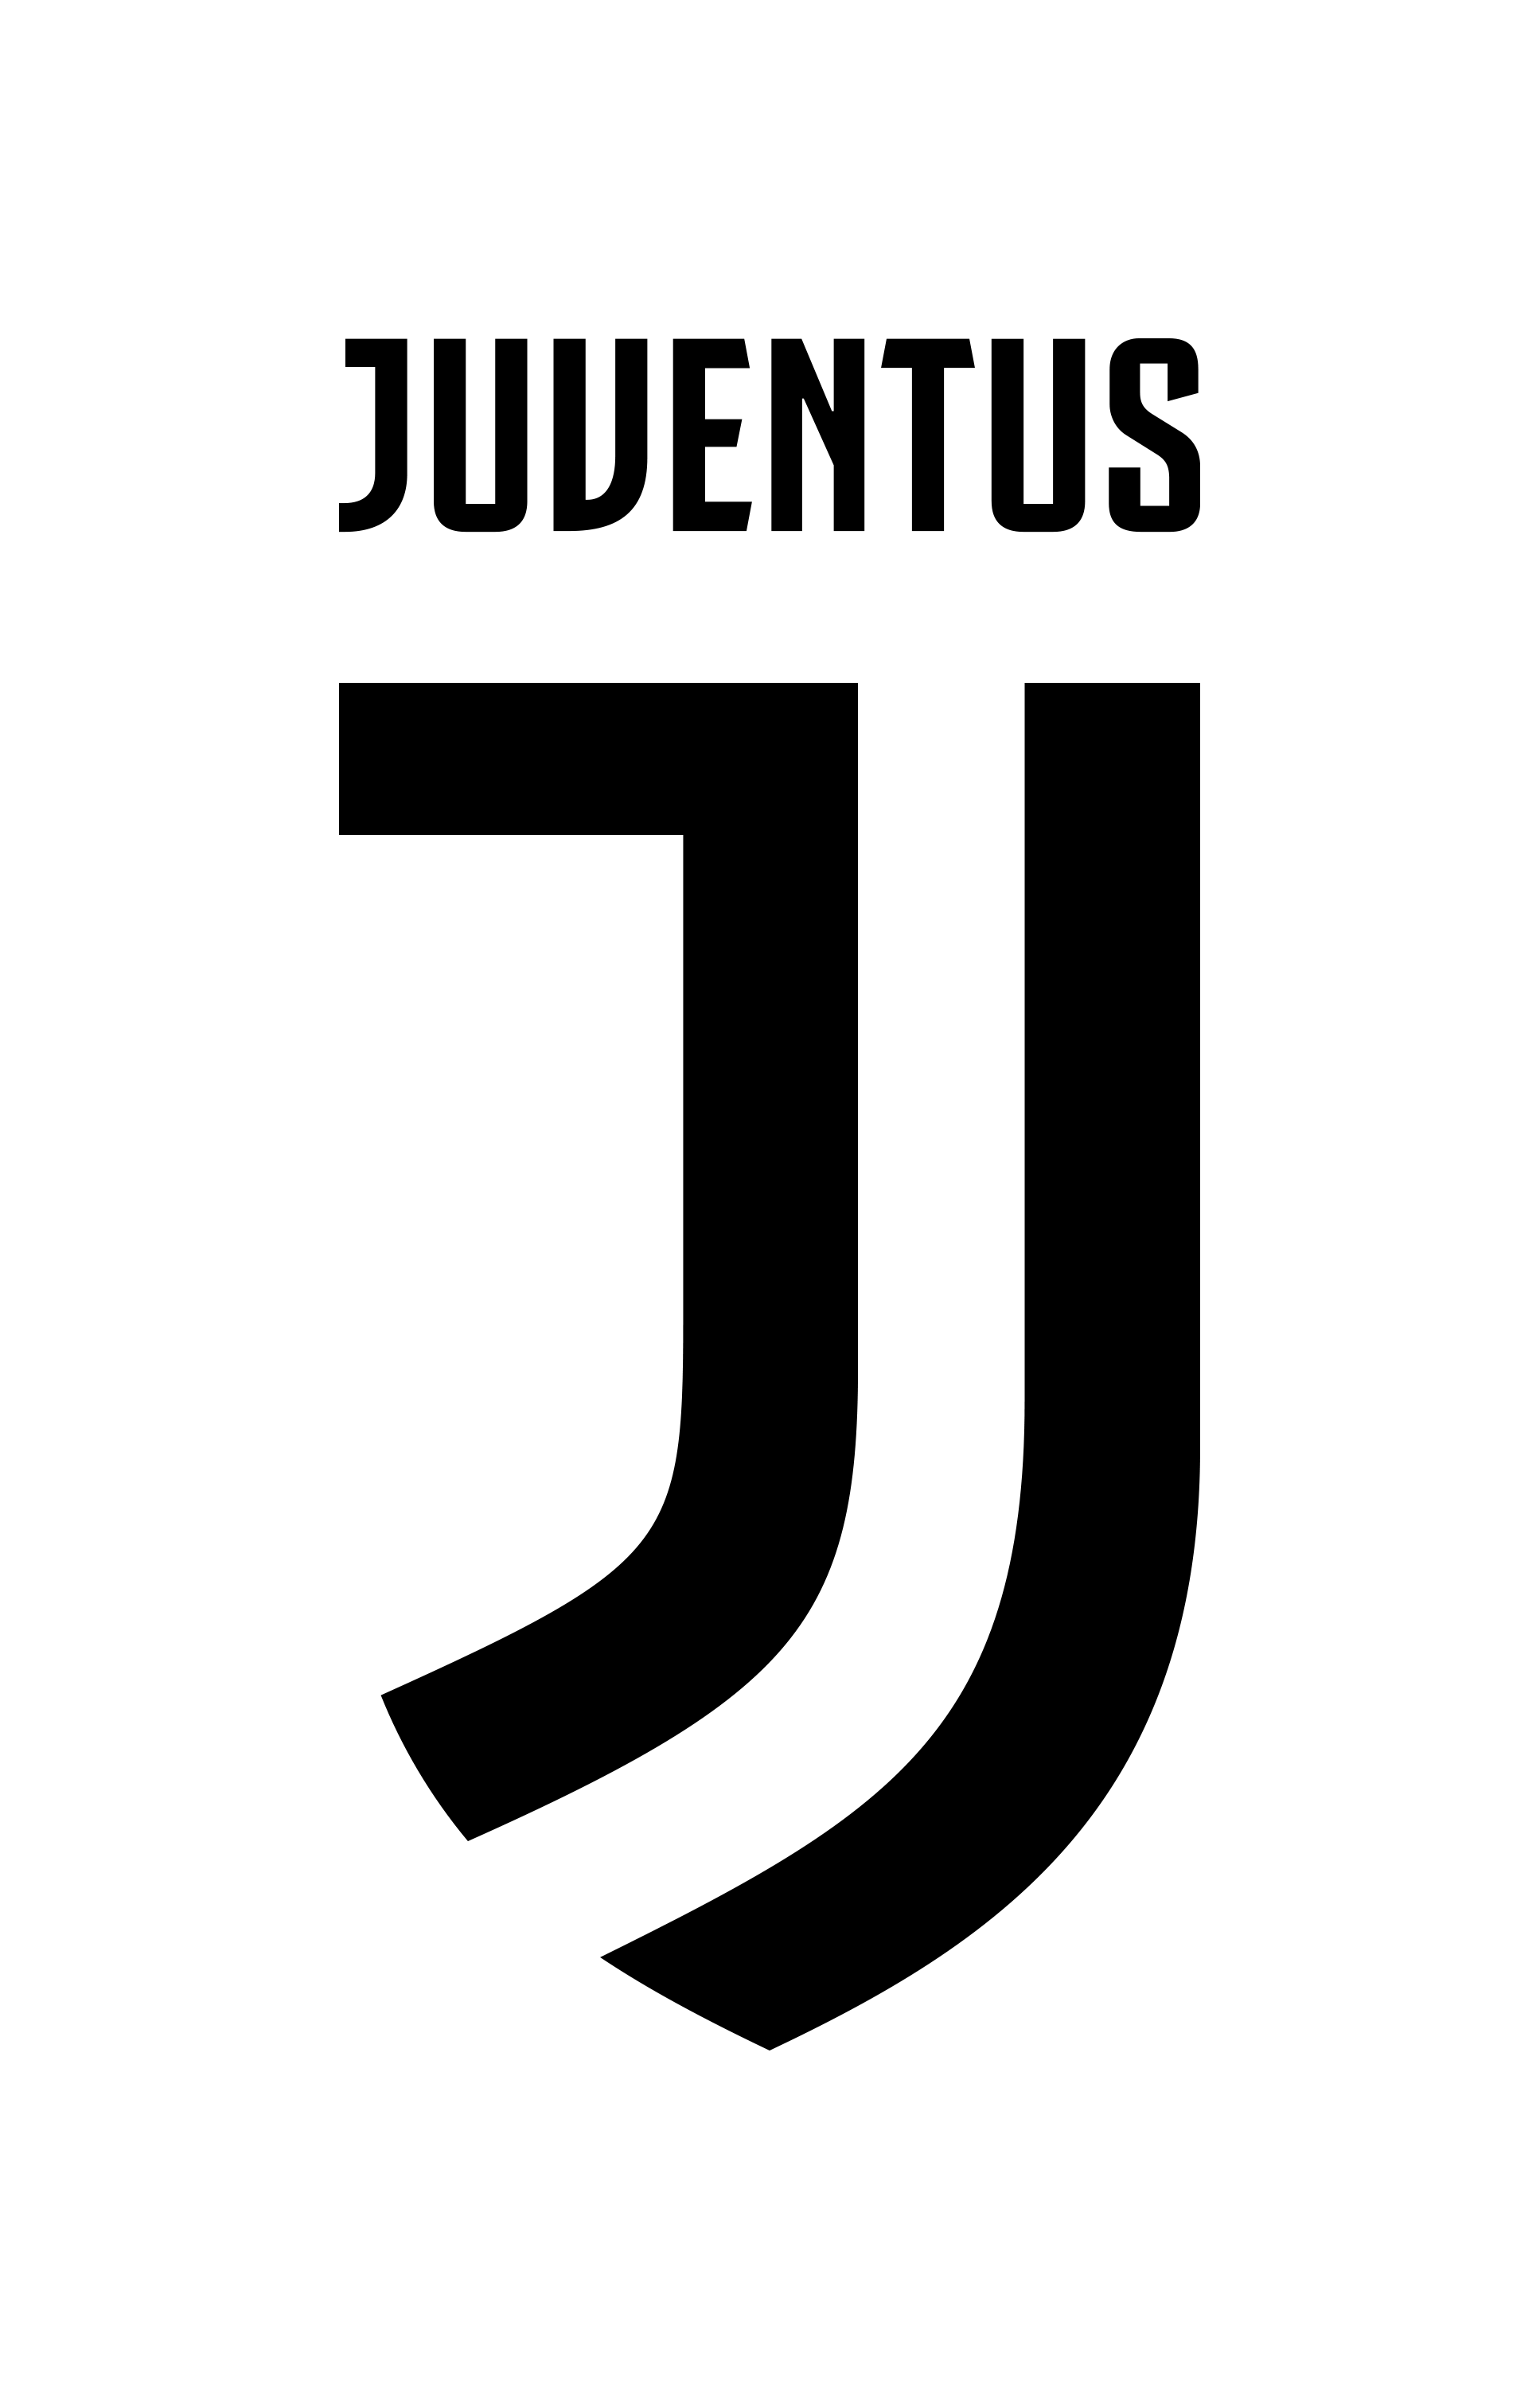 Black and White Football Logo - Juventus seeks to go 